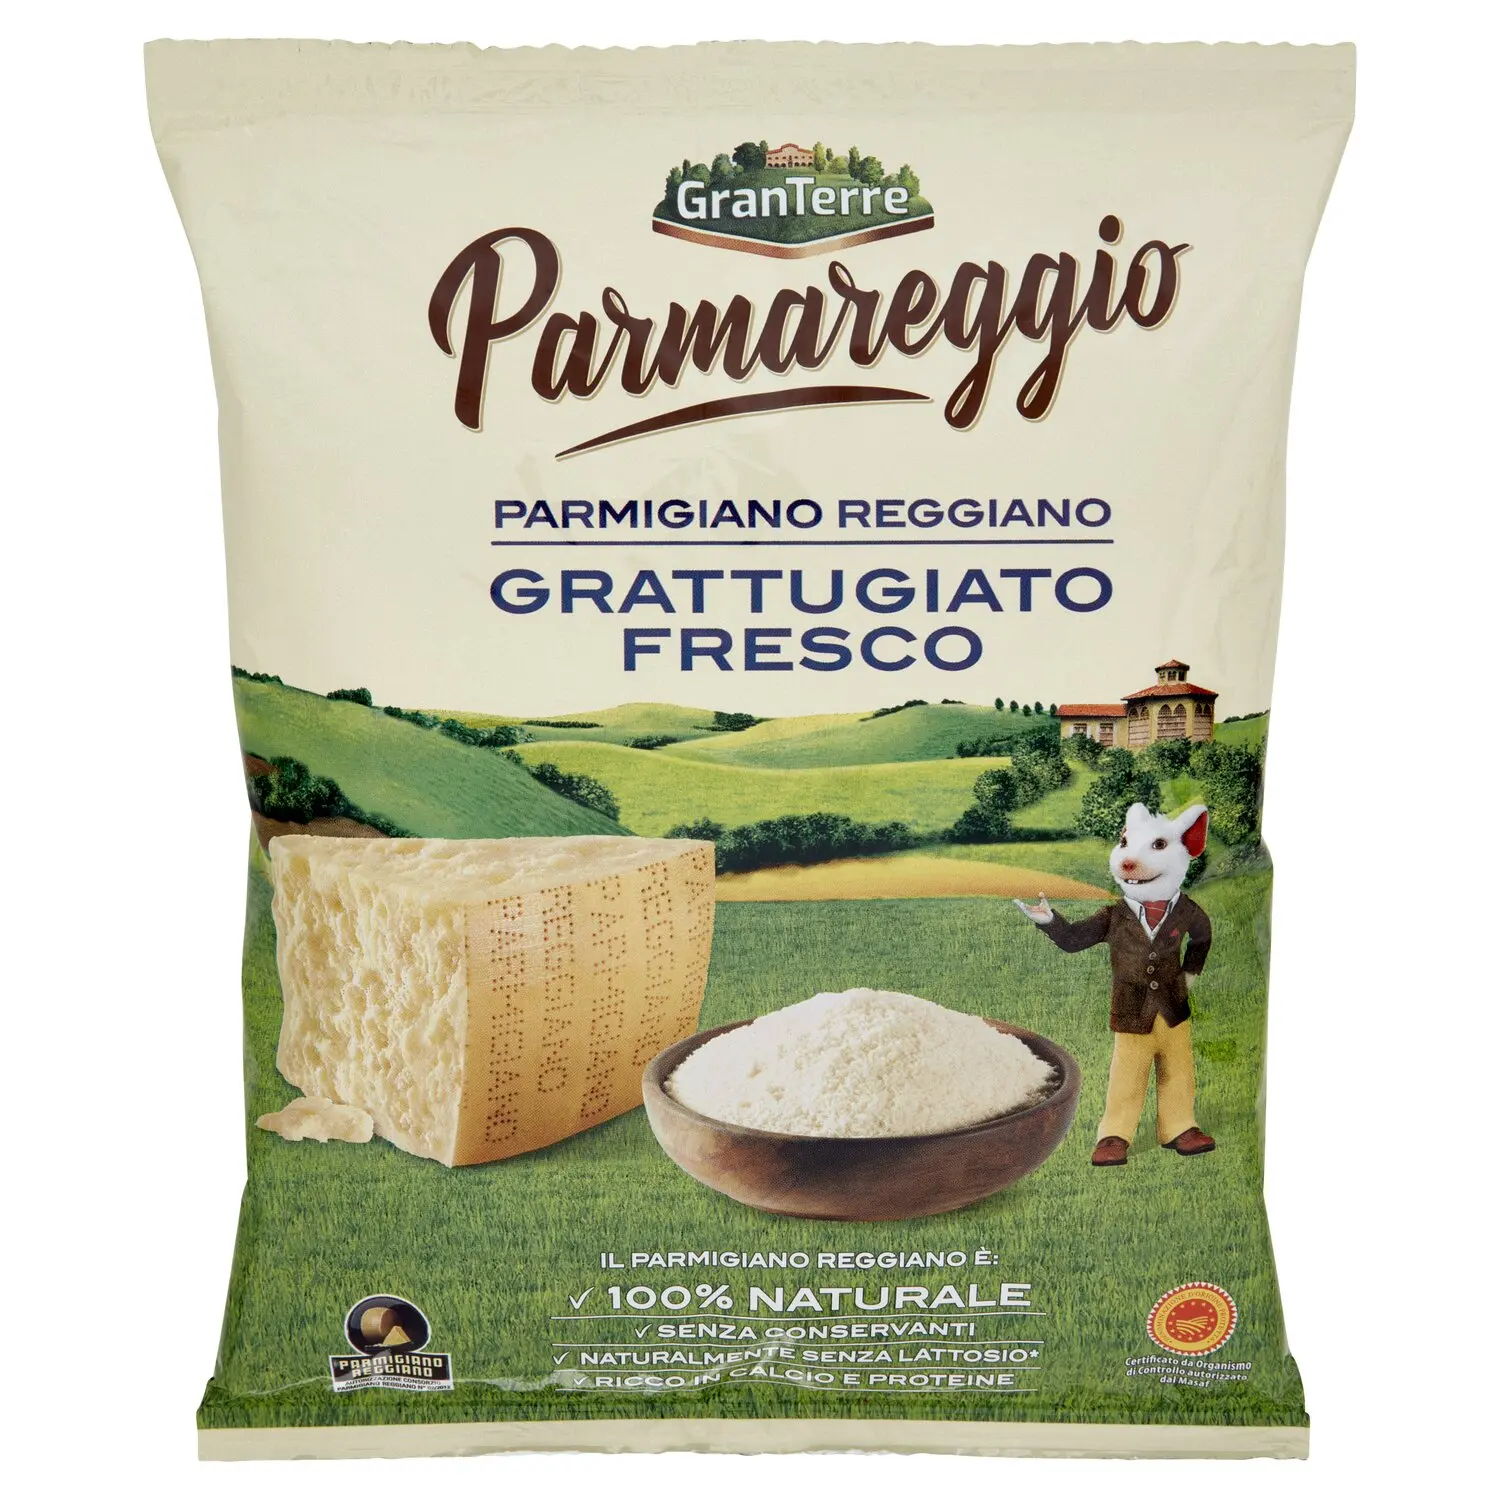 Parmareggio Parmigiano Reggiano Grattugiato Fresco 500 g